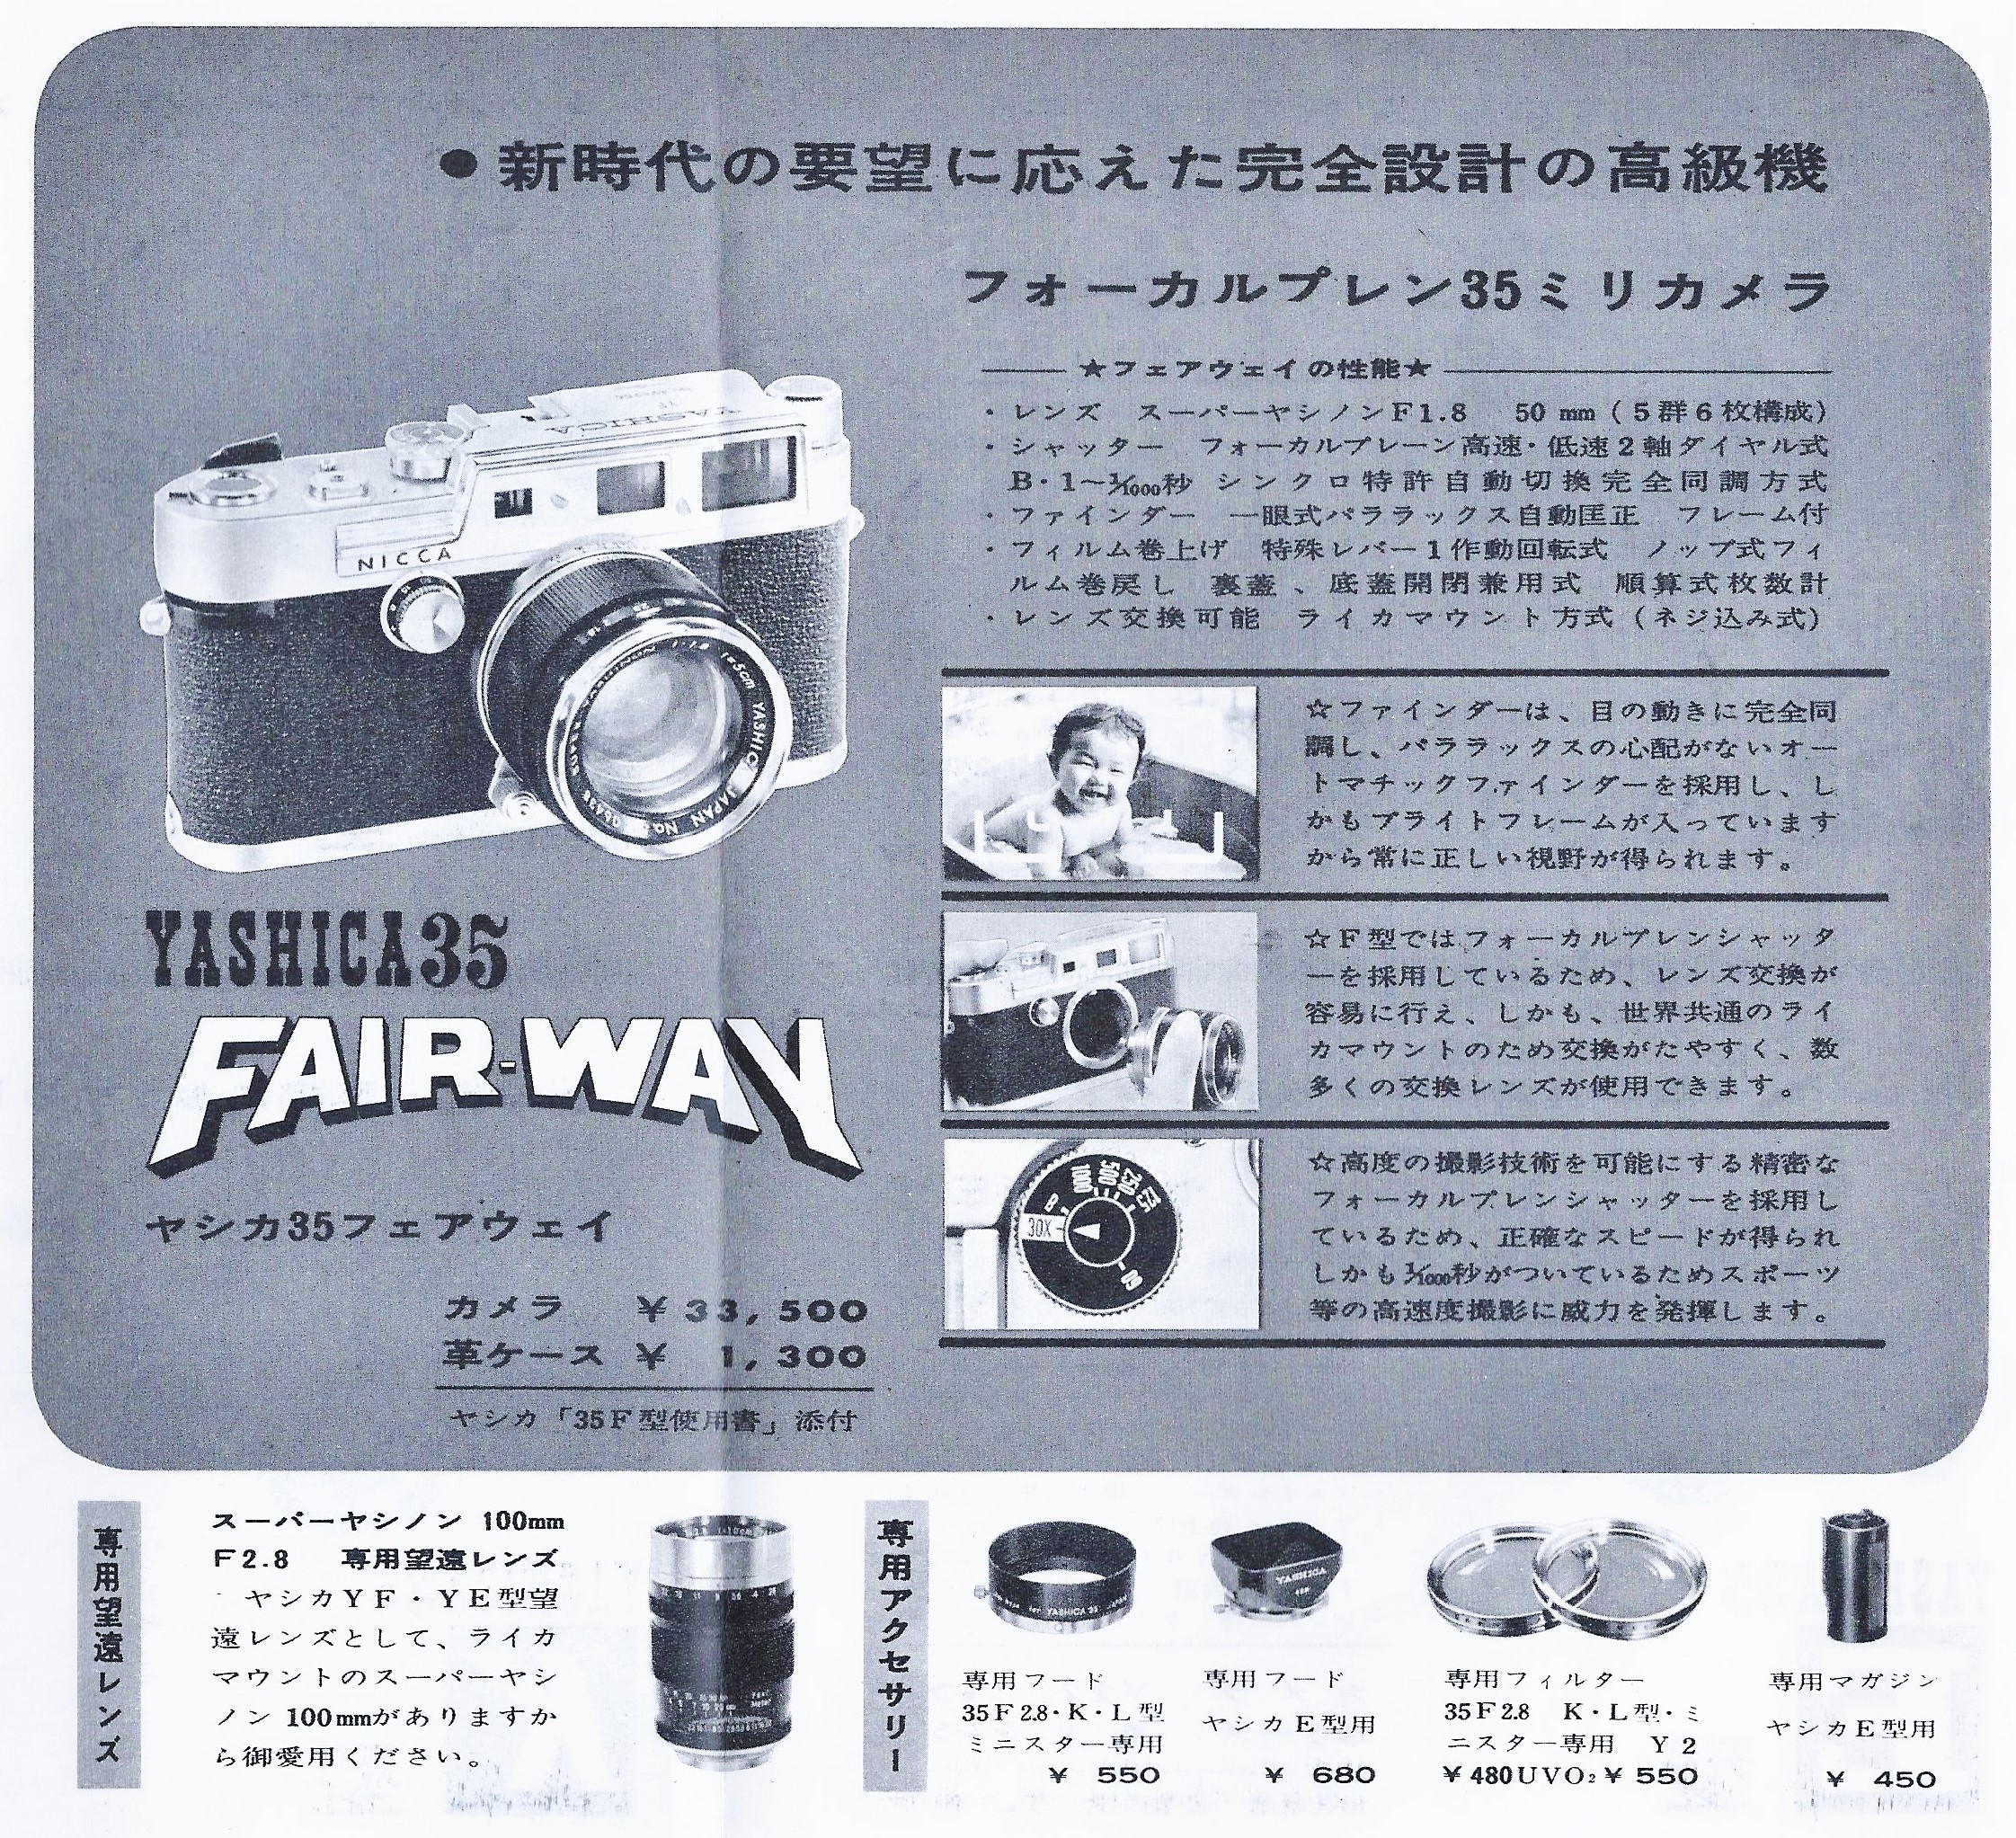 yashica 35 fair way brochure